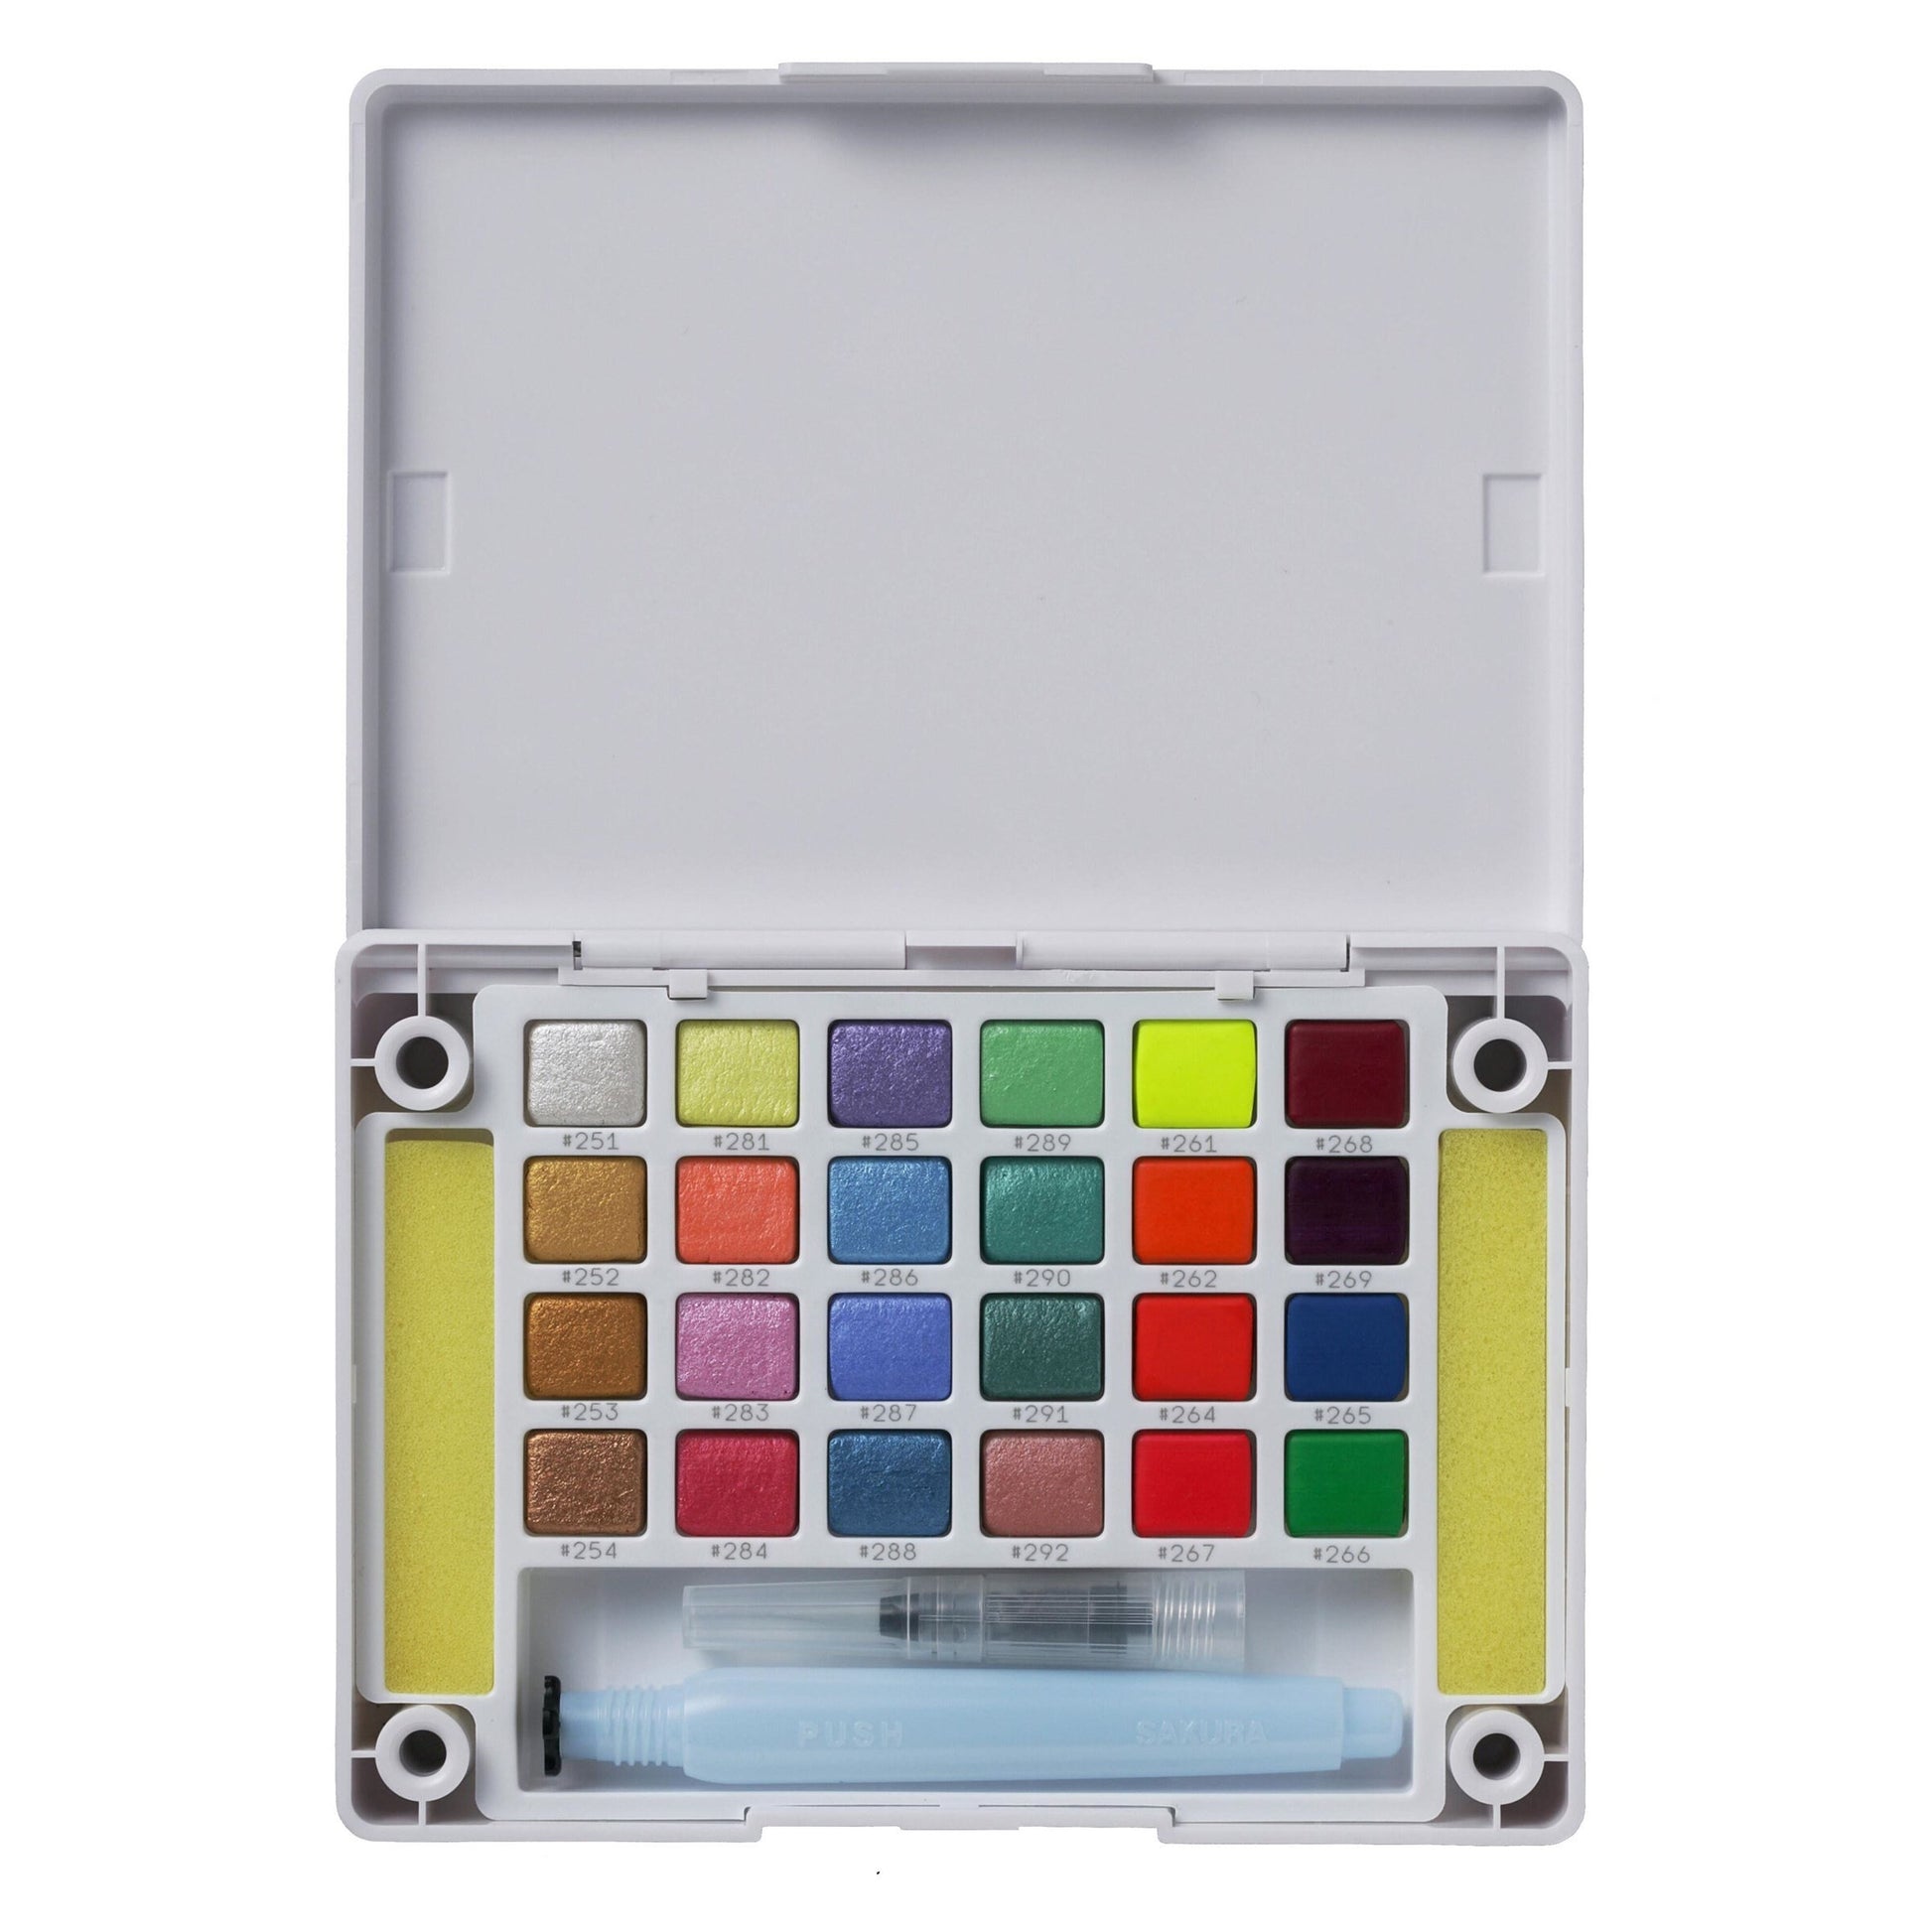 Koi Water Colors Pocket Field Sketch Box Creative Art Colors, 12 half pans